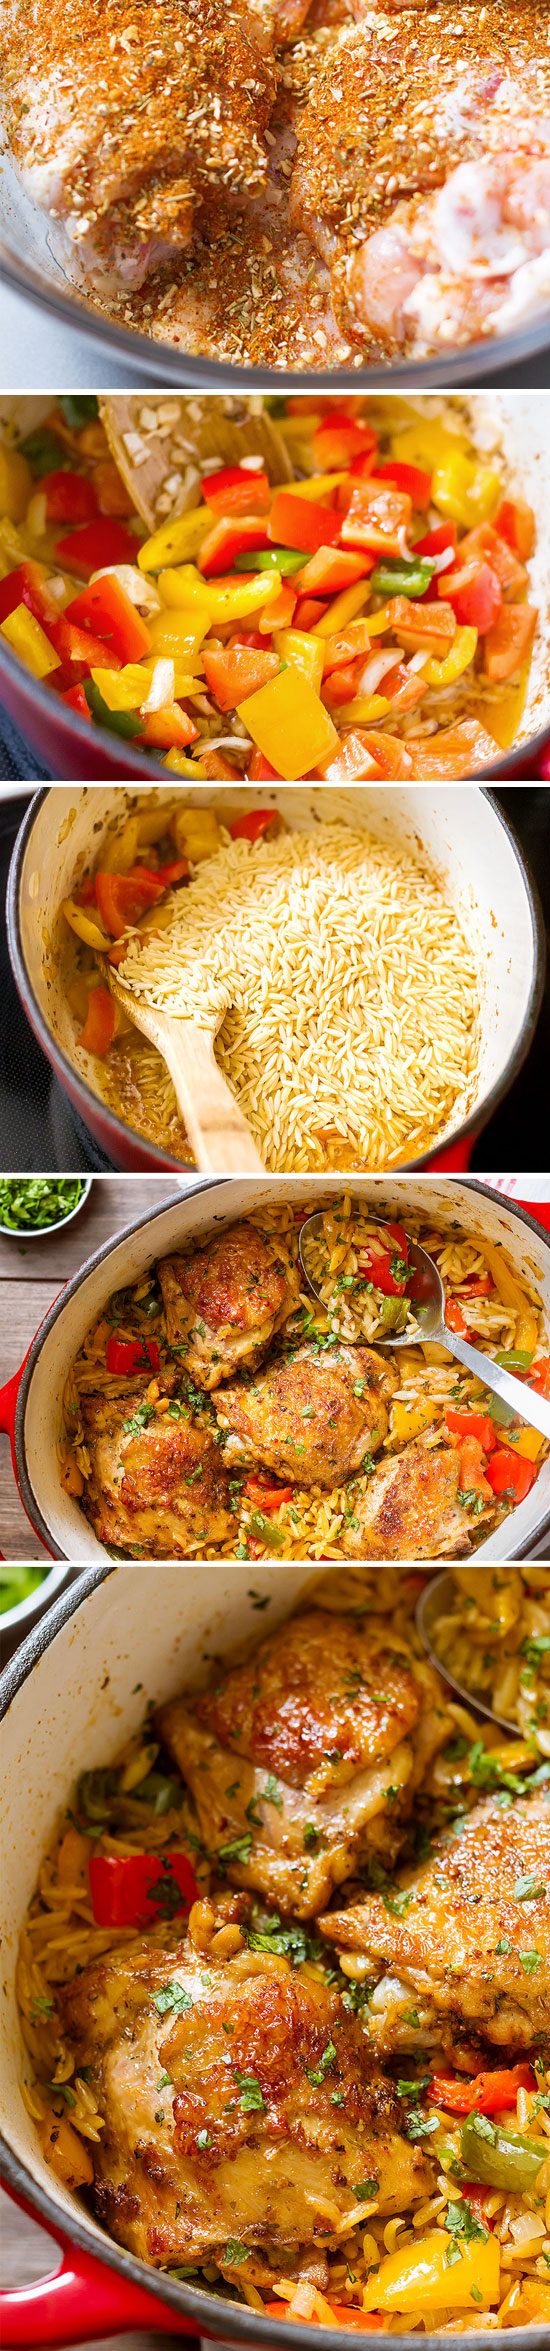 One-Pot Chicken Fajita With Orzo Pasta - $chicken #pasta #fajita #recipe #eatwell101 - This chicken fajita orzo pasta is a nourishing one-pot dish that screams comfort food!